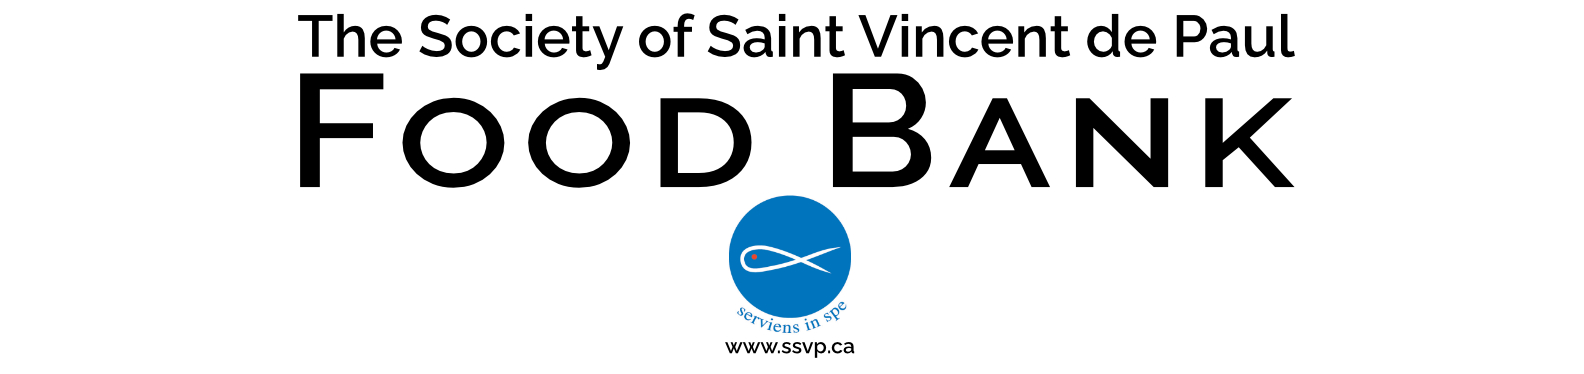 The Society of Saint Vincent de Paul Food Bank, St Vincent fish logo. Website svdp.ca